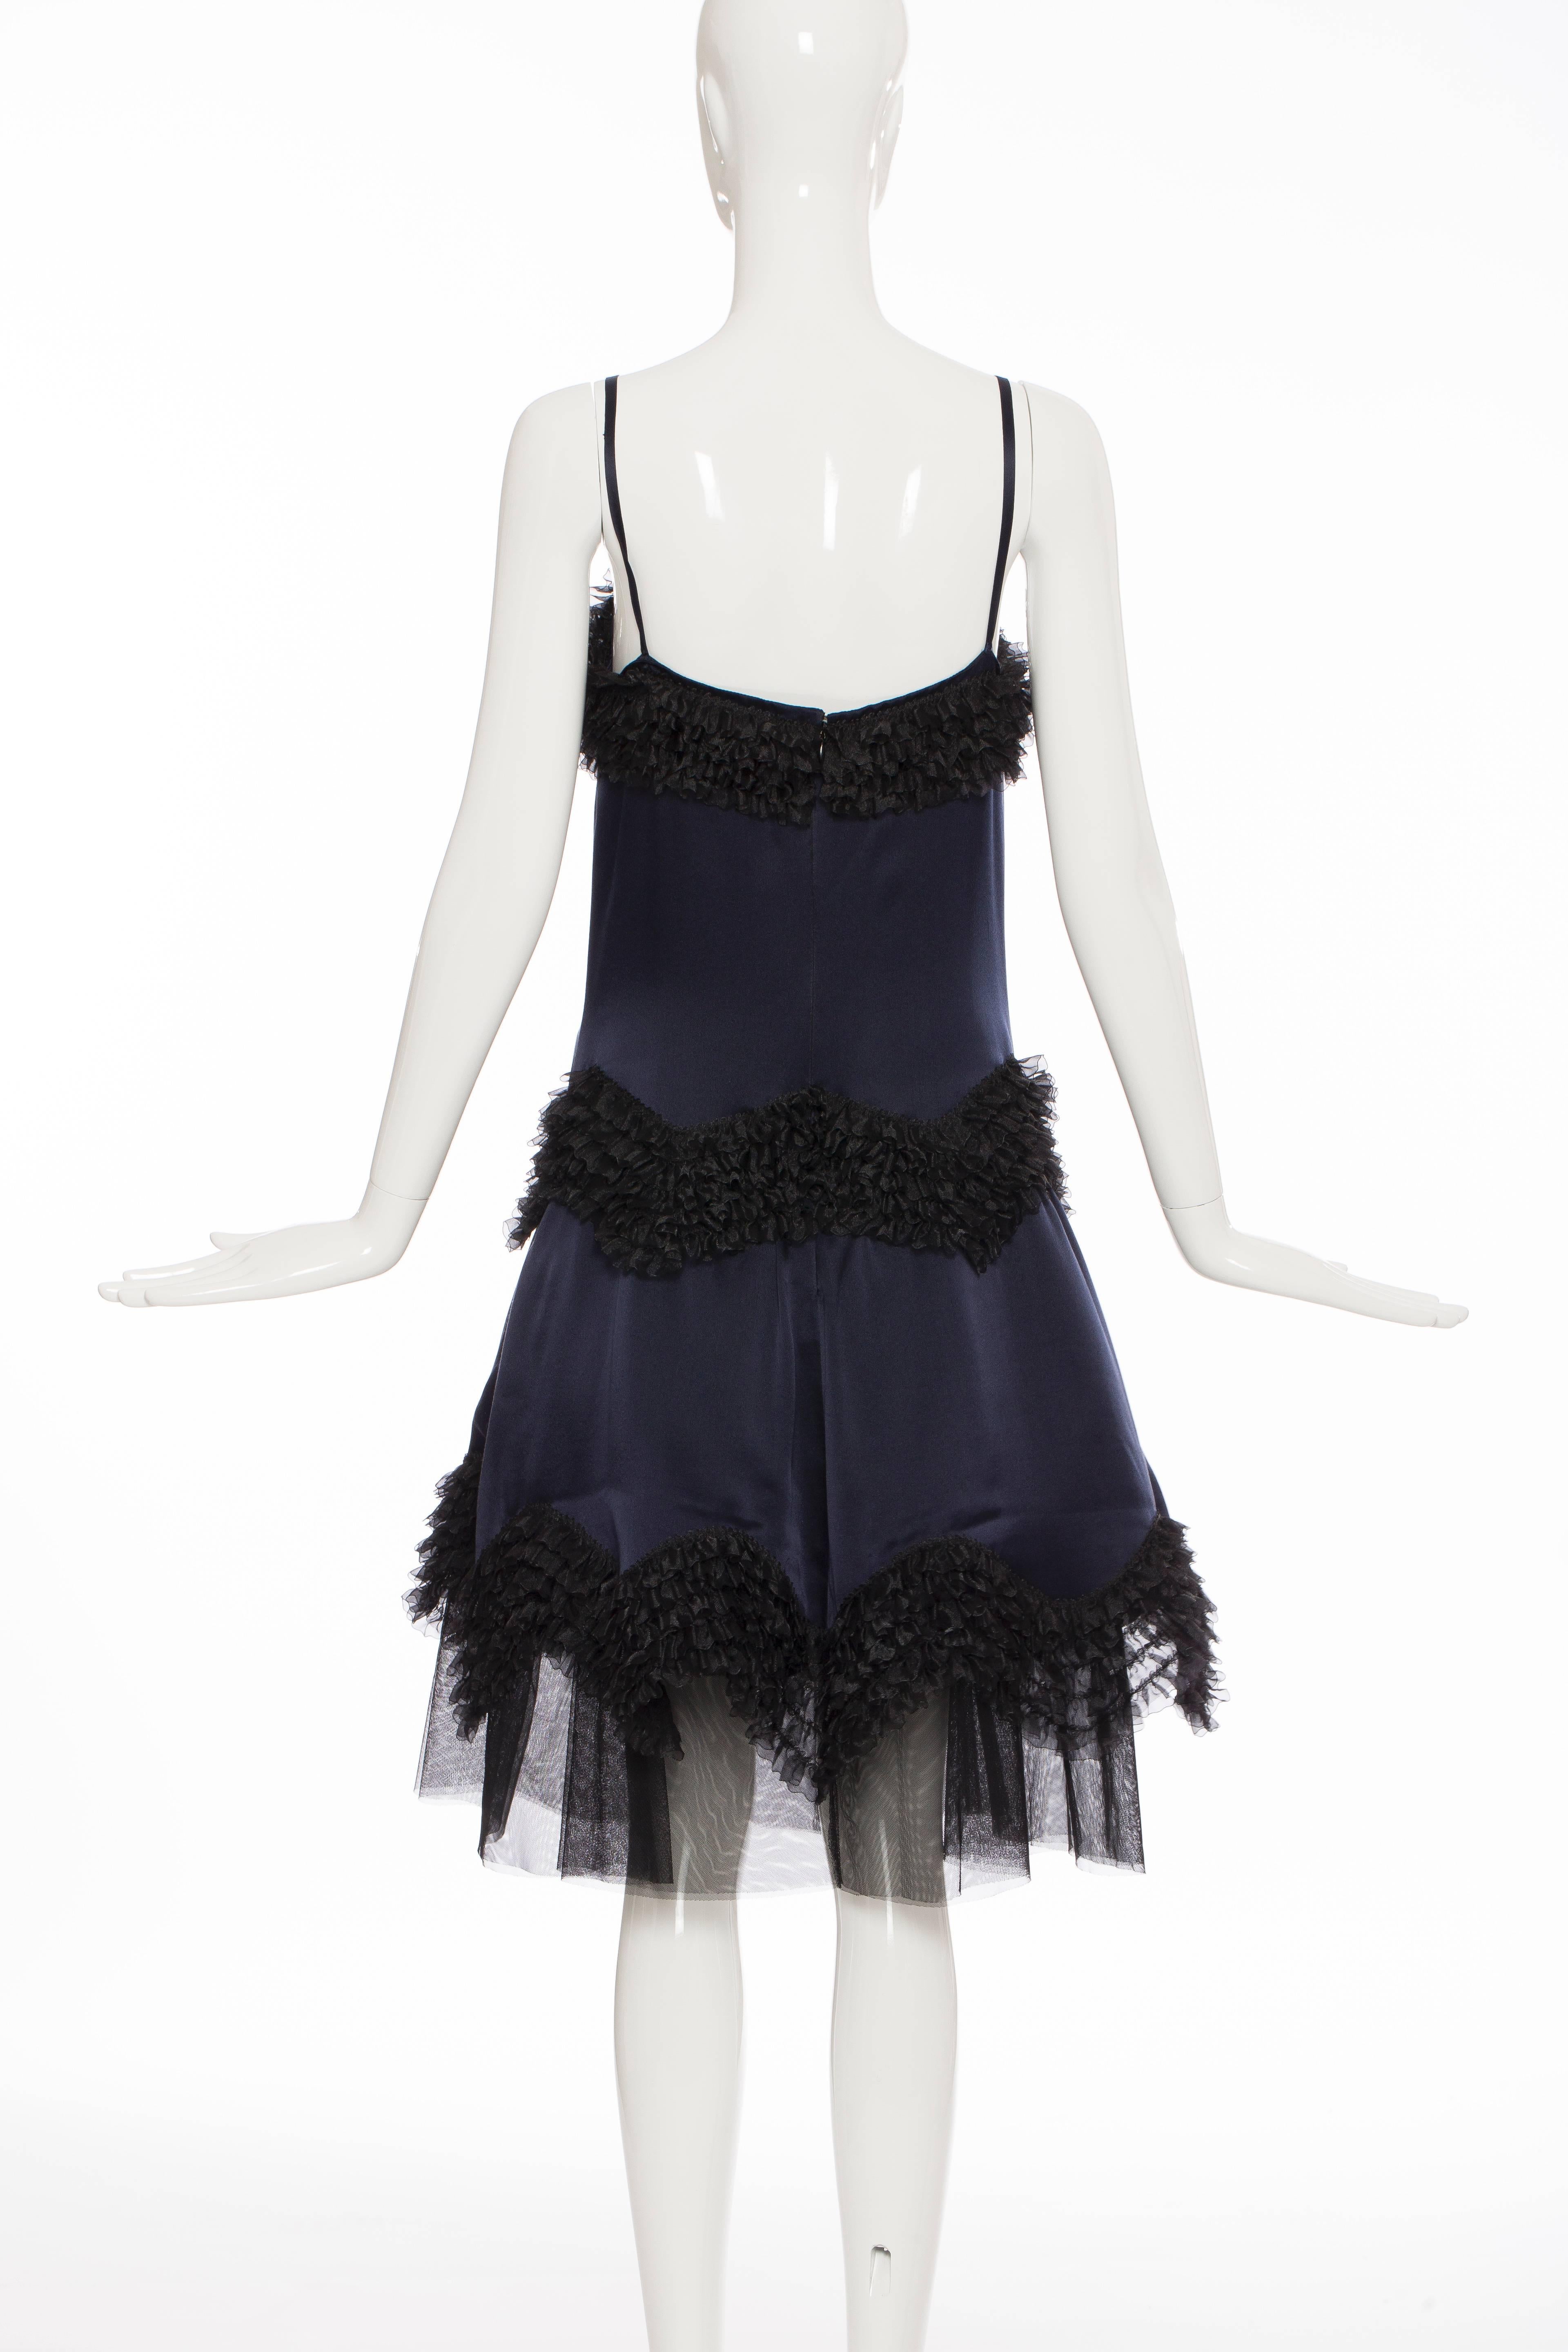 Women's Chanel Midnight Blue Silk Satin & Black Chiffon Evening Dress, Pre - Fall 2004